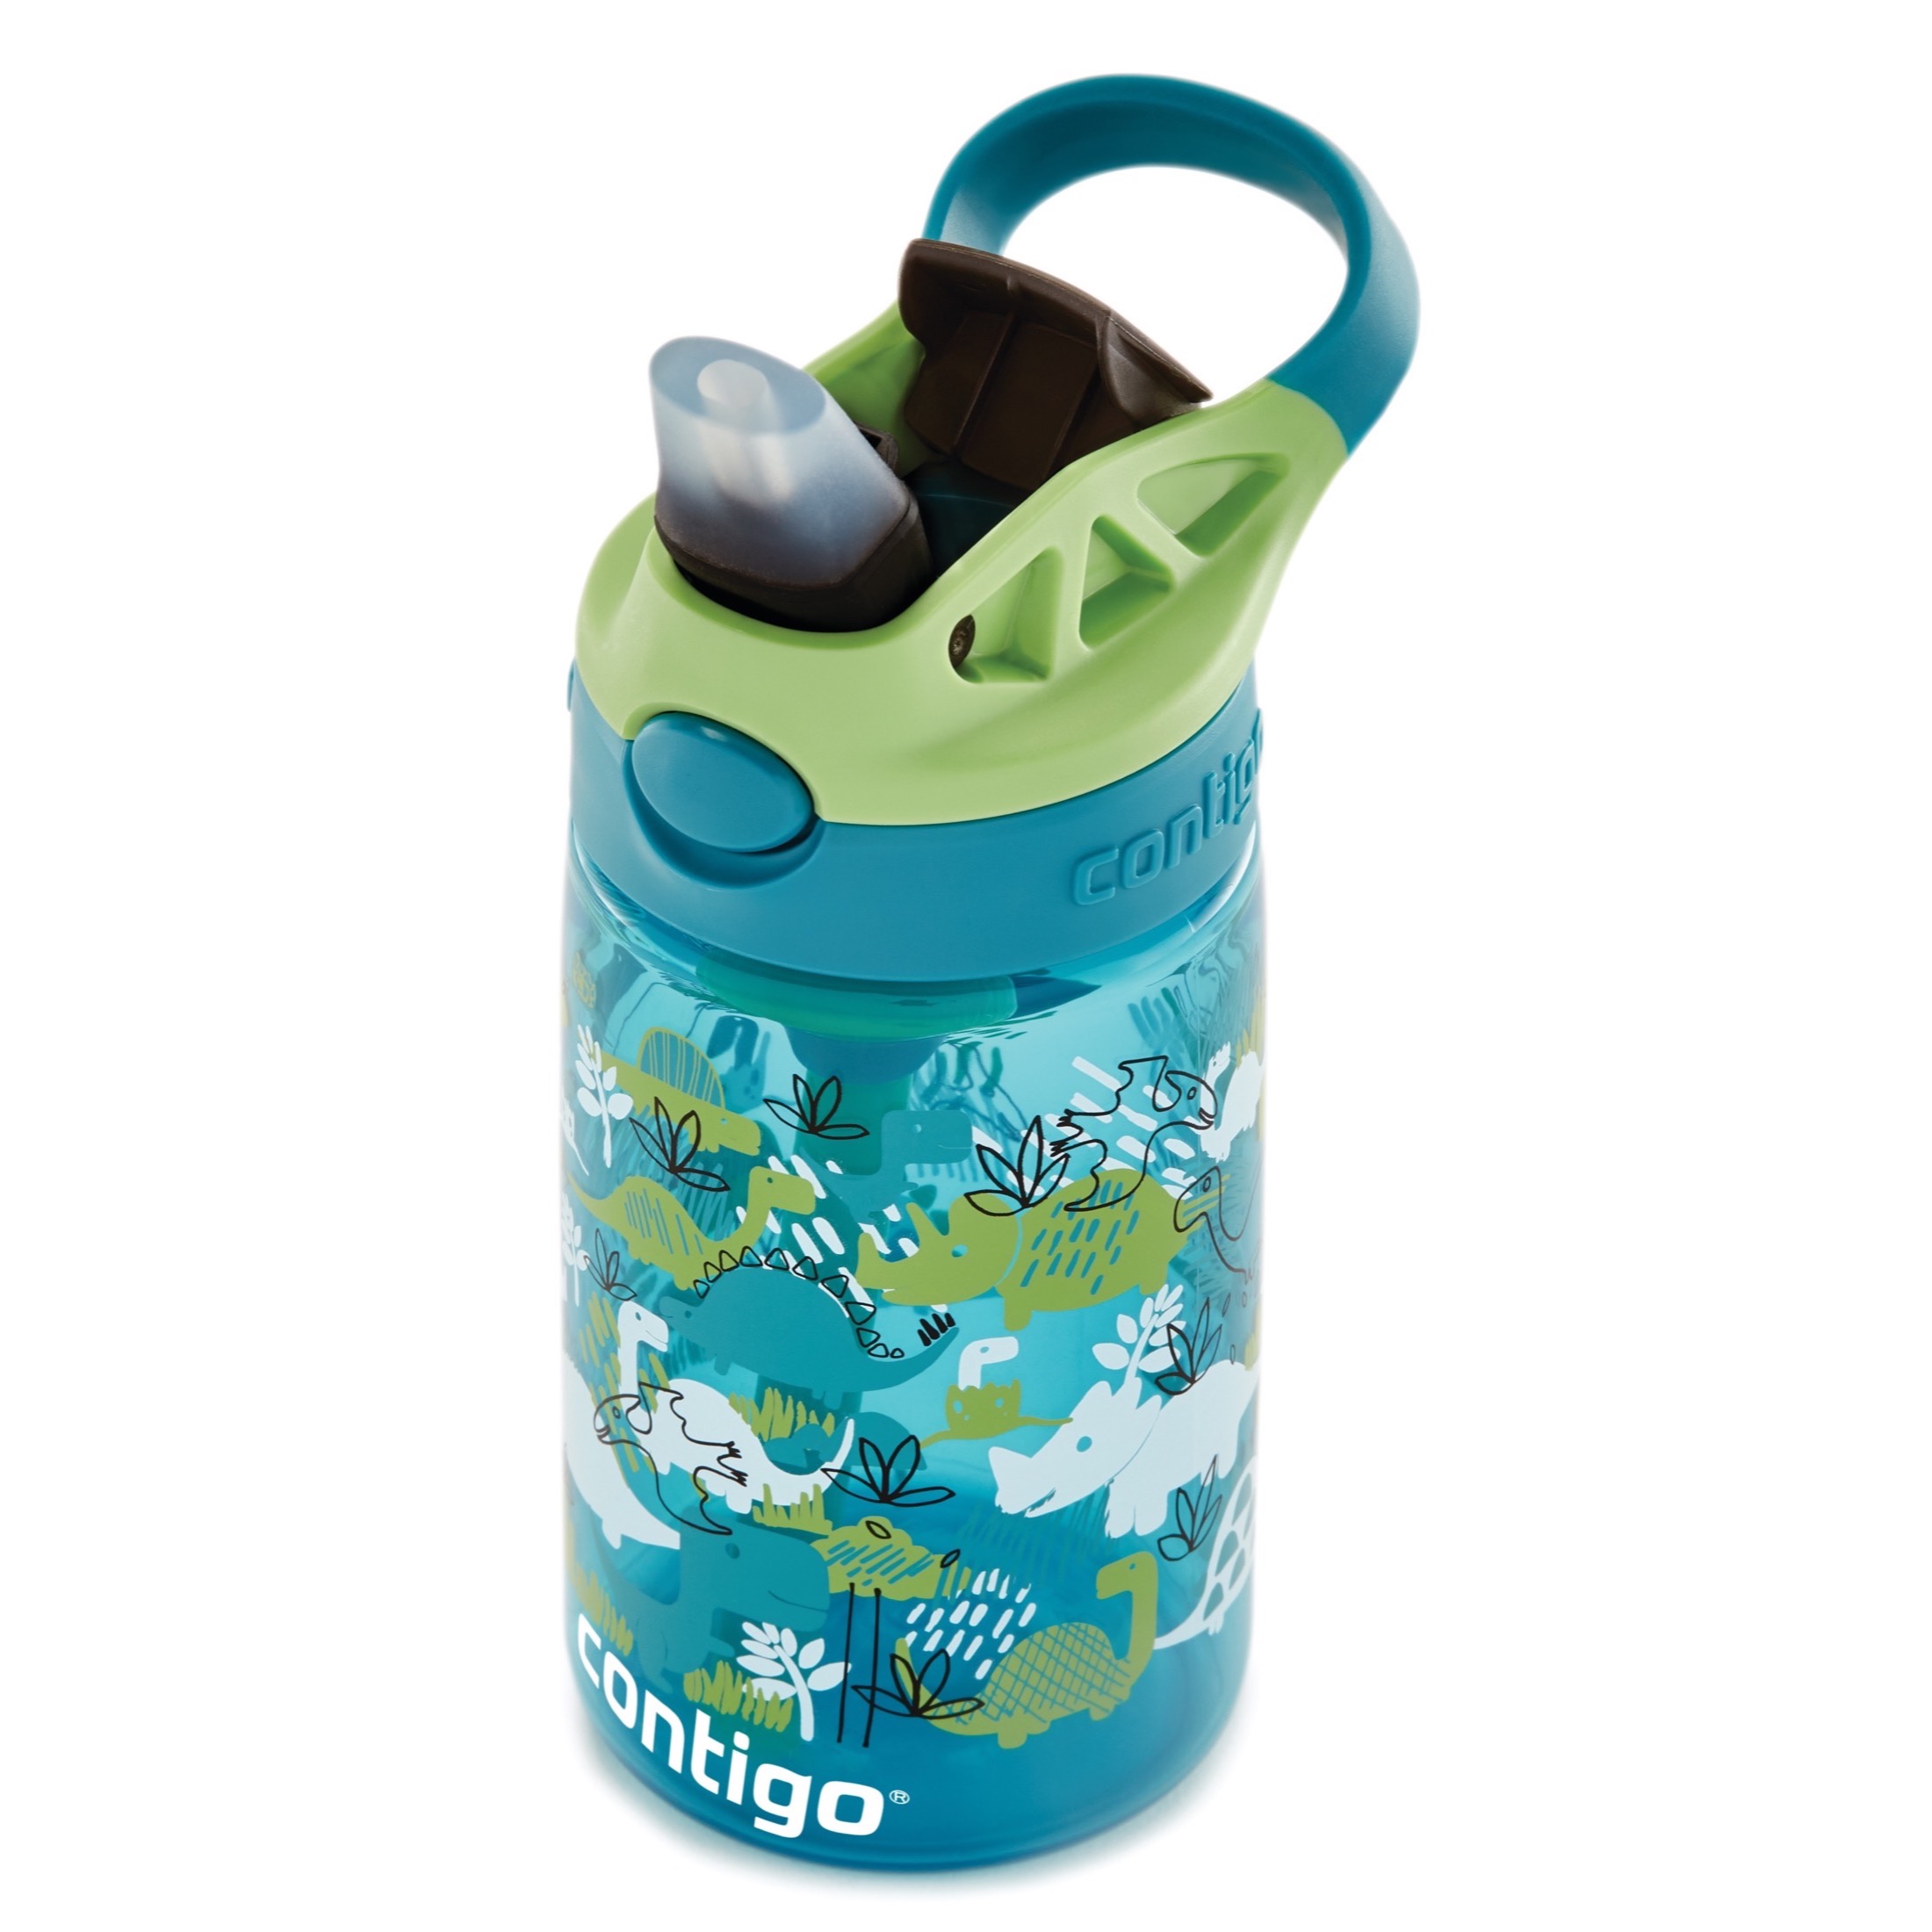 Contigo Kids Water Bottle with Autospout Straw Green & Blue, 14 fl oz. - image 4 of 8